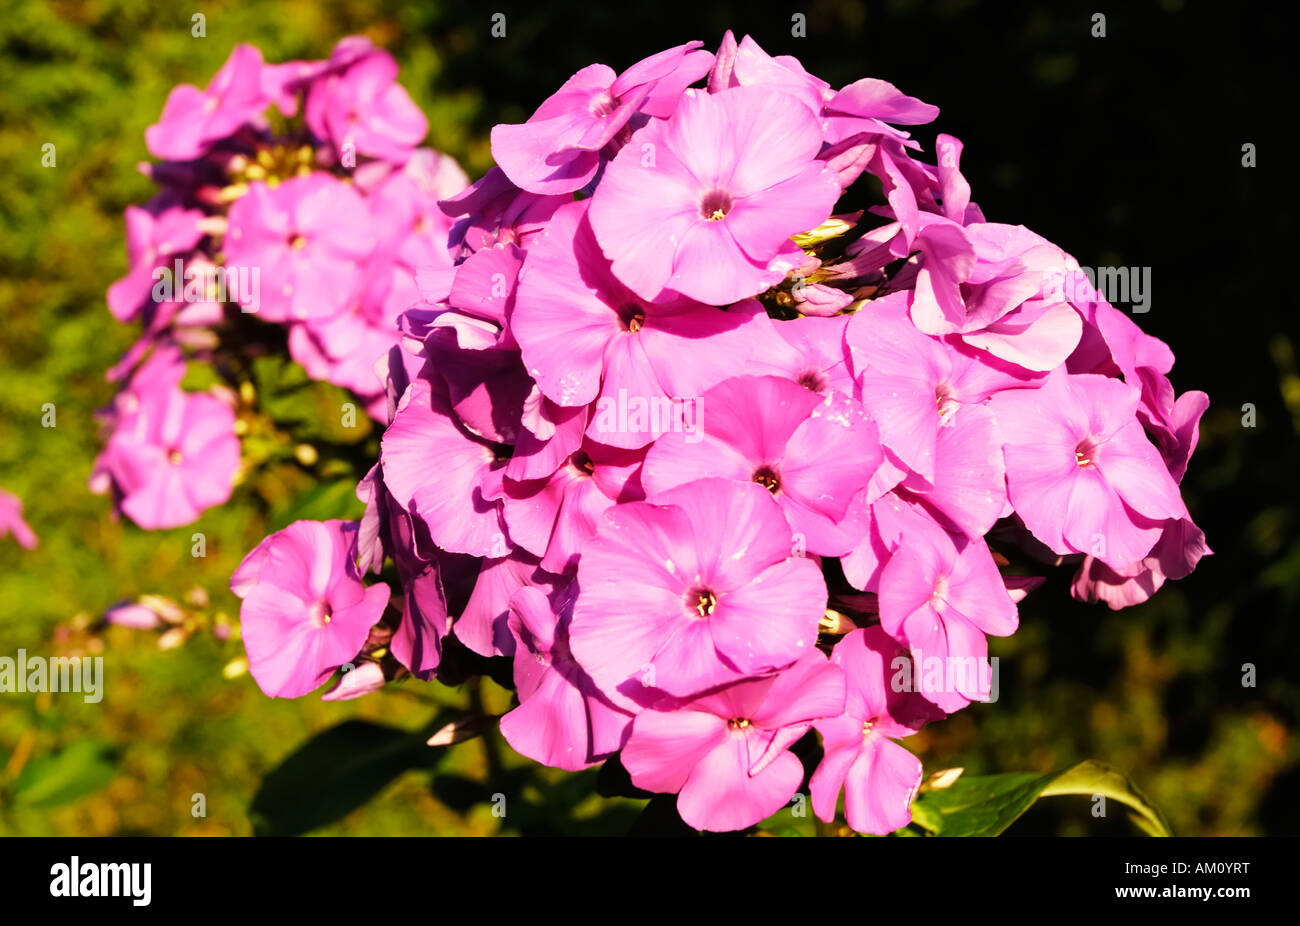 Pink flower of phlox paniculata, Polemoriaceae growing in rustic garden Stock Photo